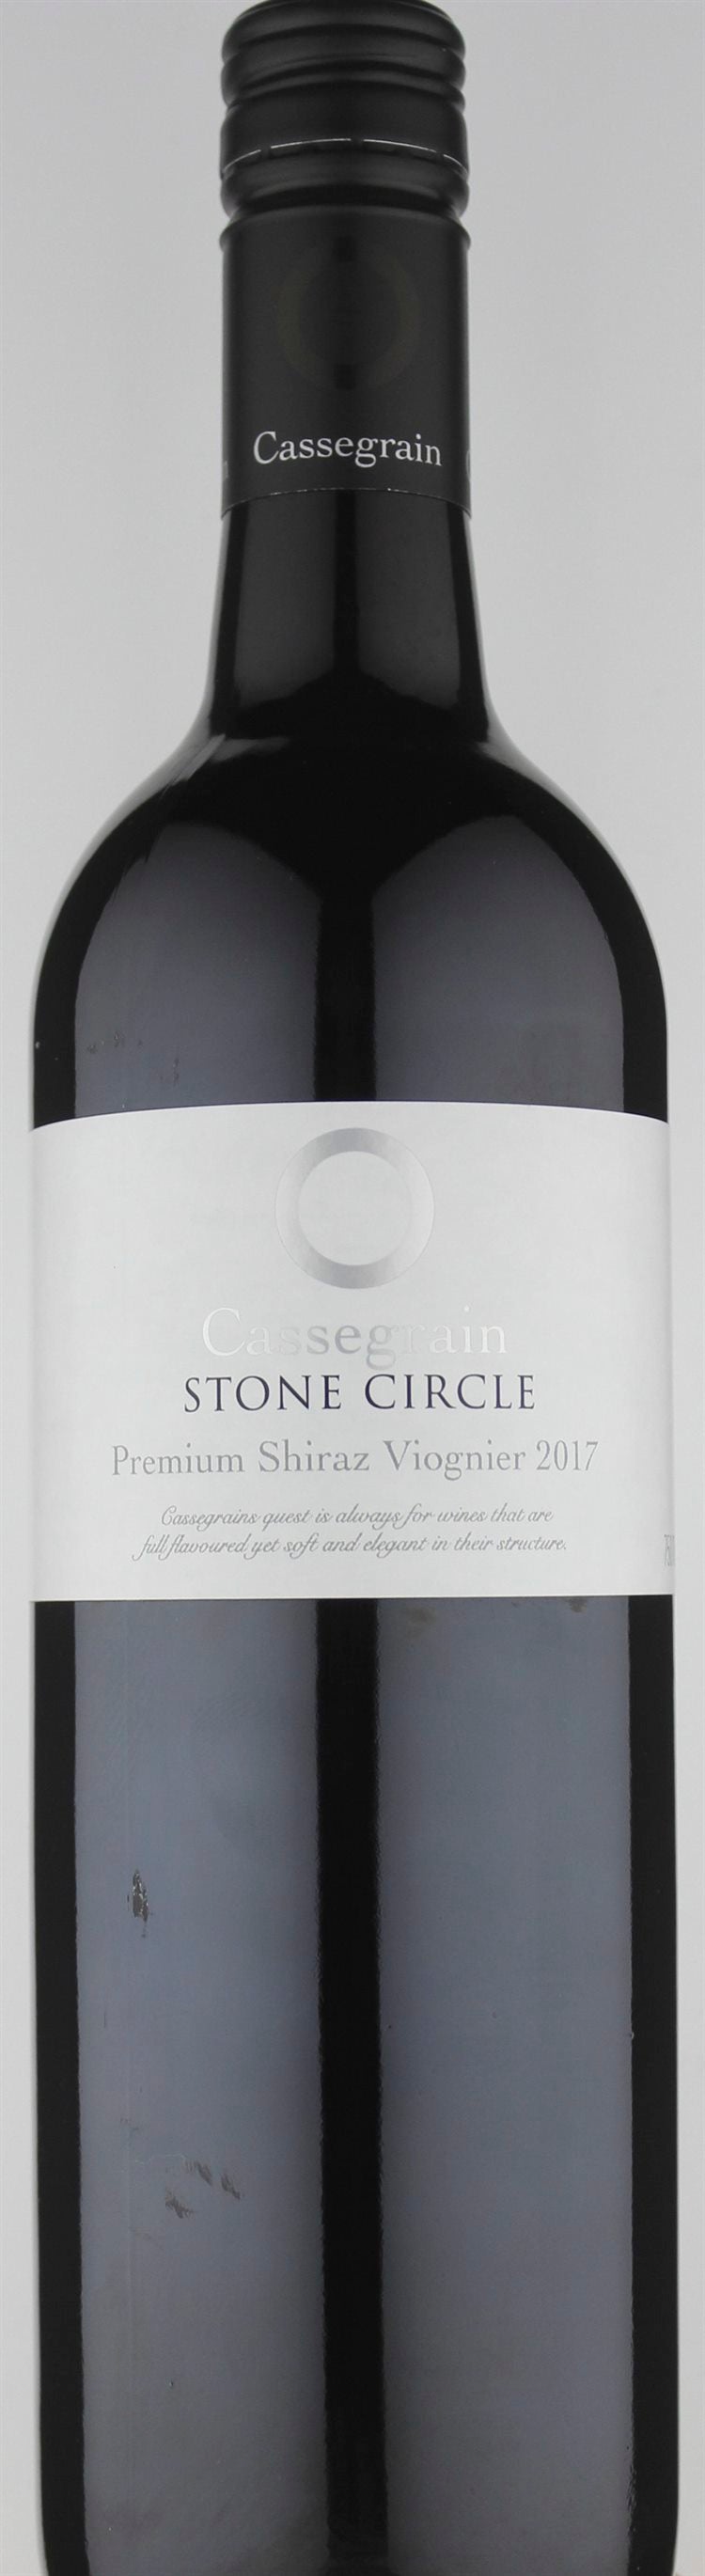 Cassegrain Stone Circle Premium Shiraz Viognier 2017